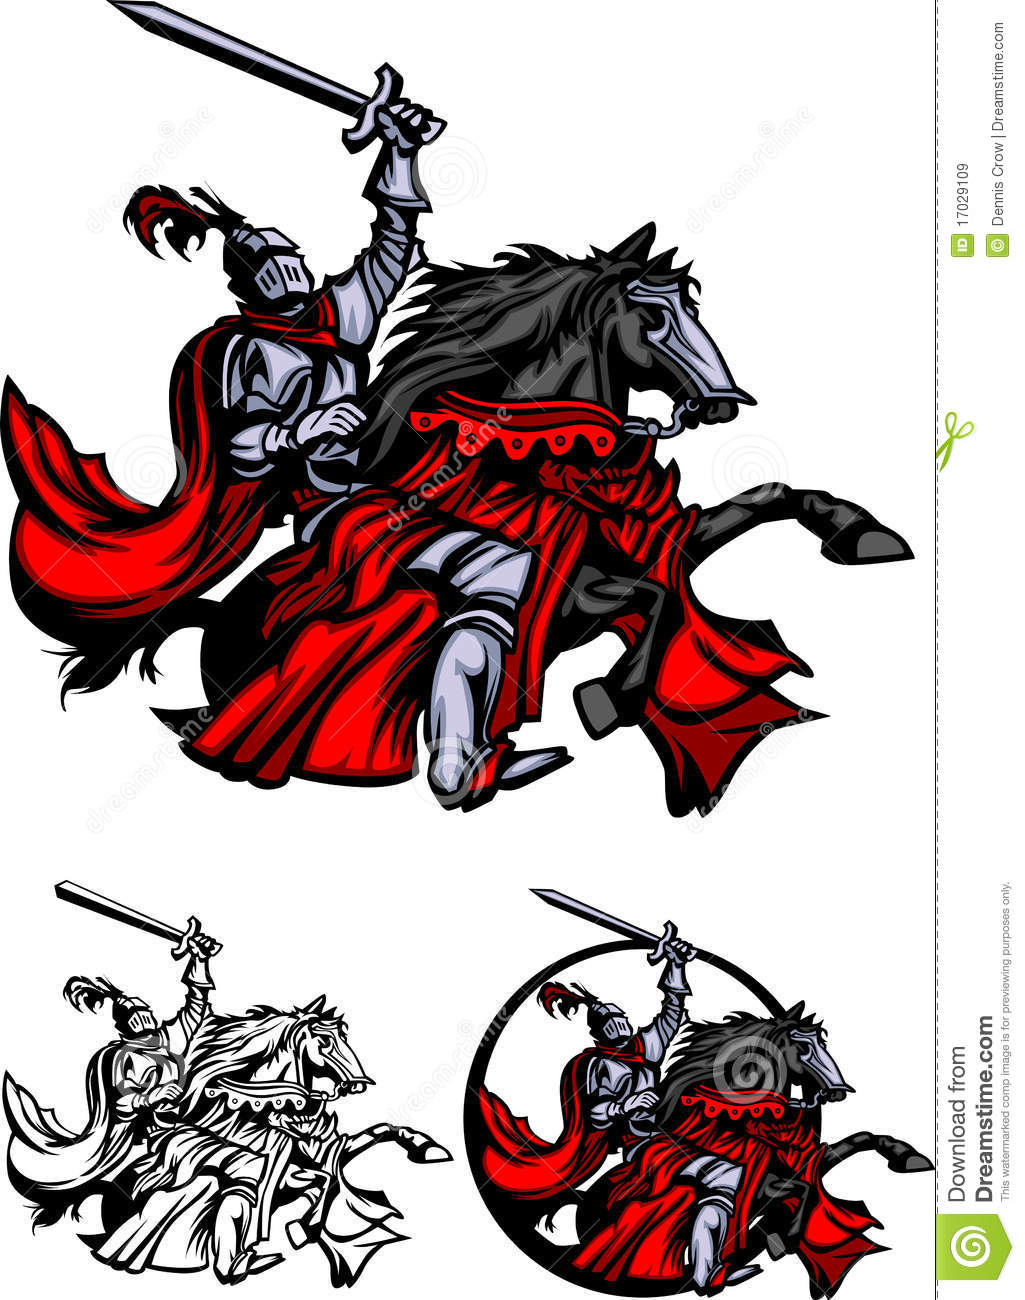 Knight Paladin With Horse Mascot Logo Royalty Free Stock Images